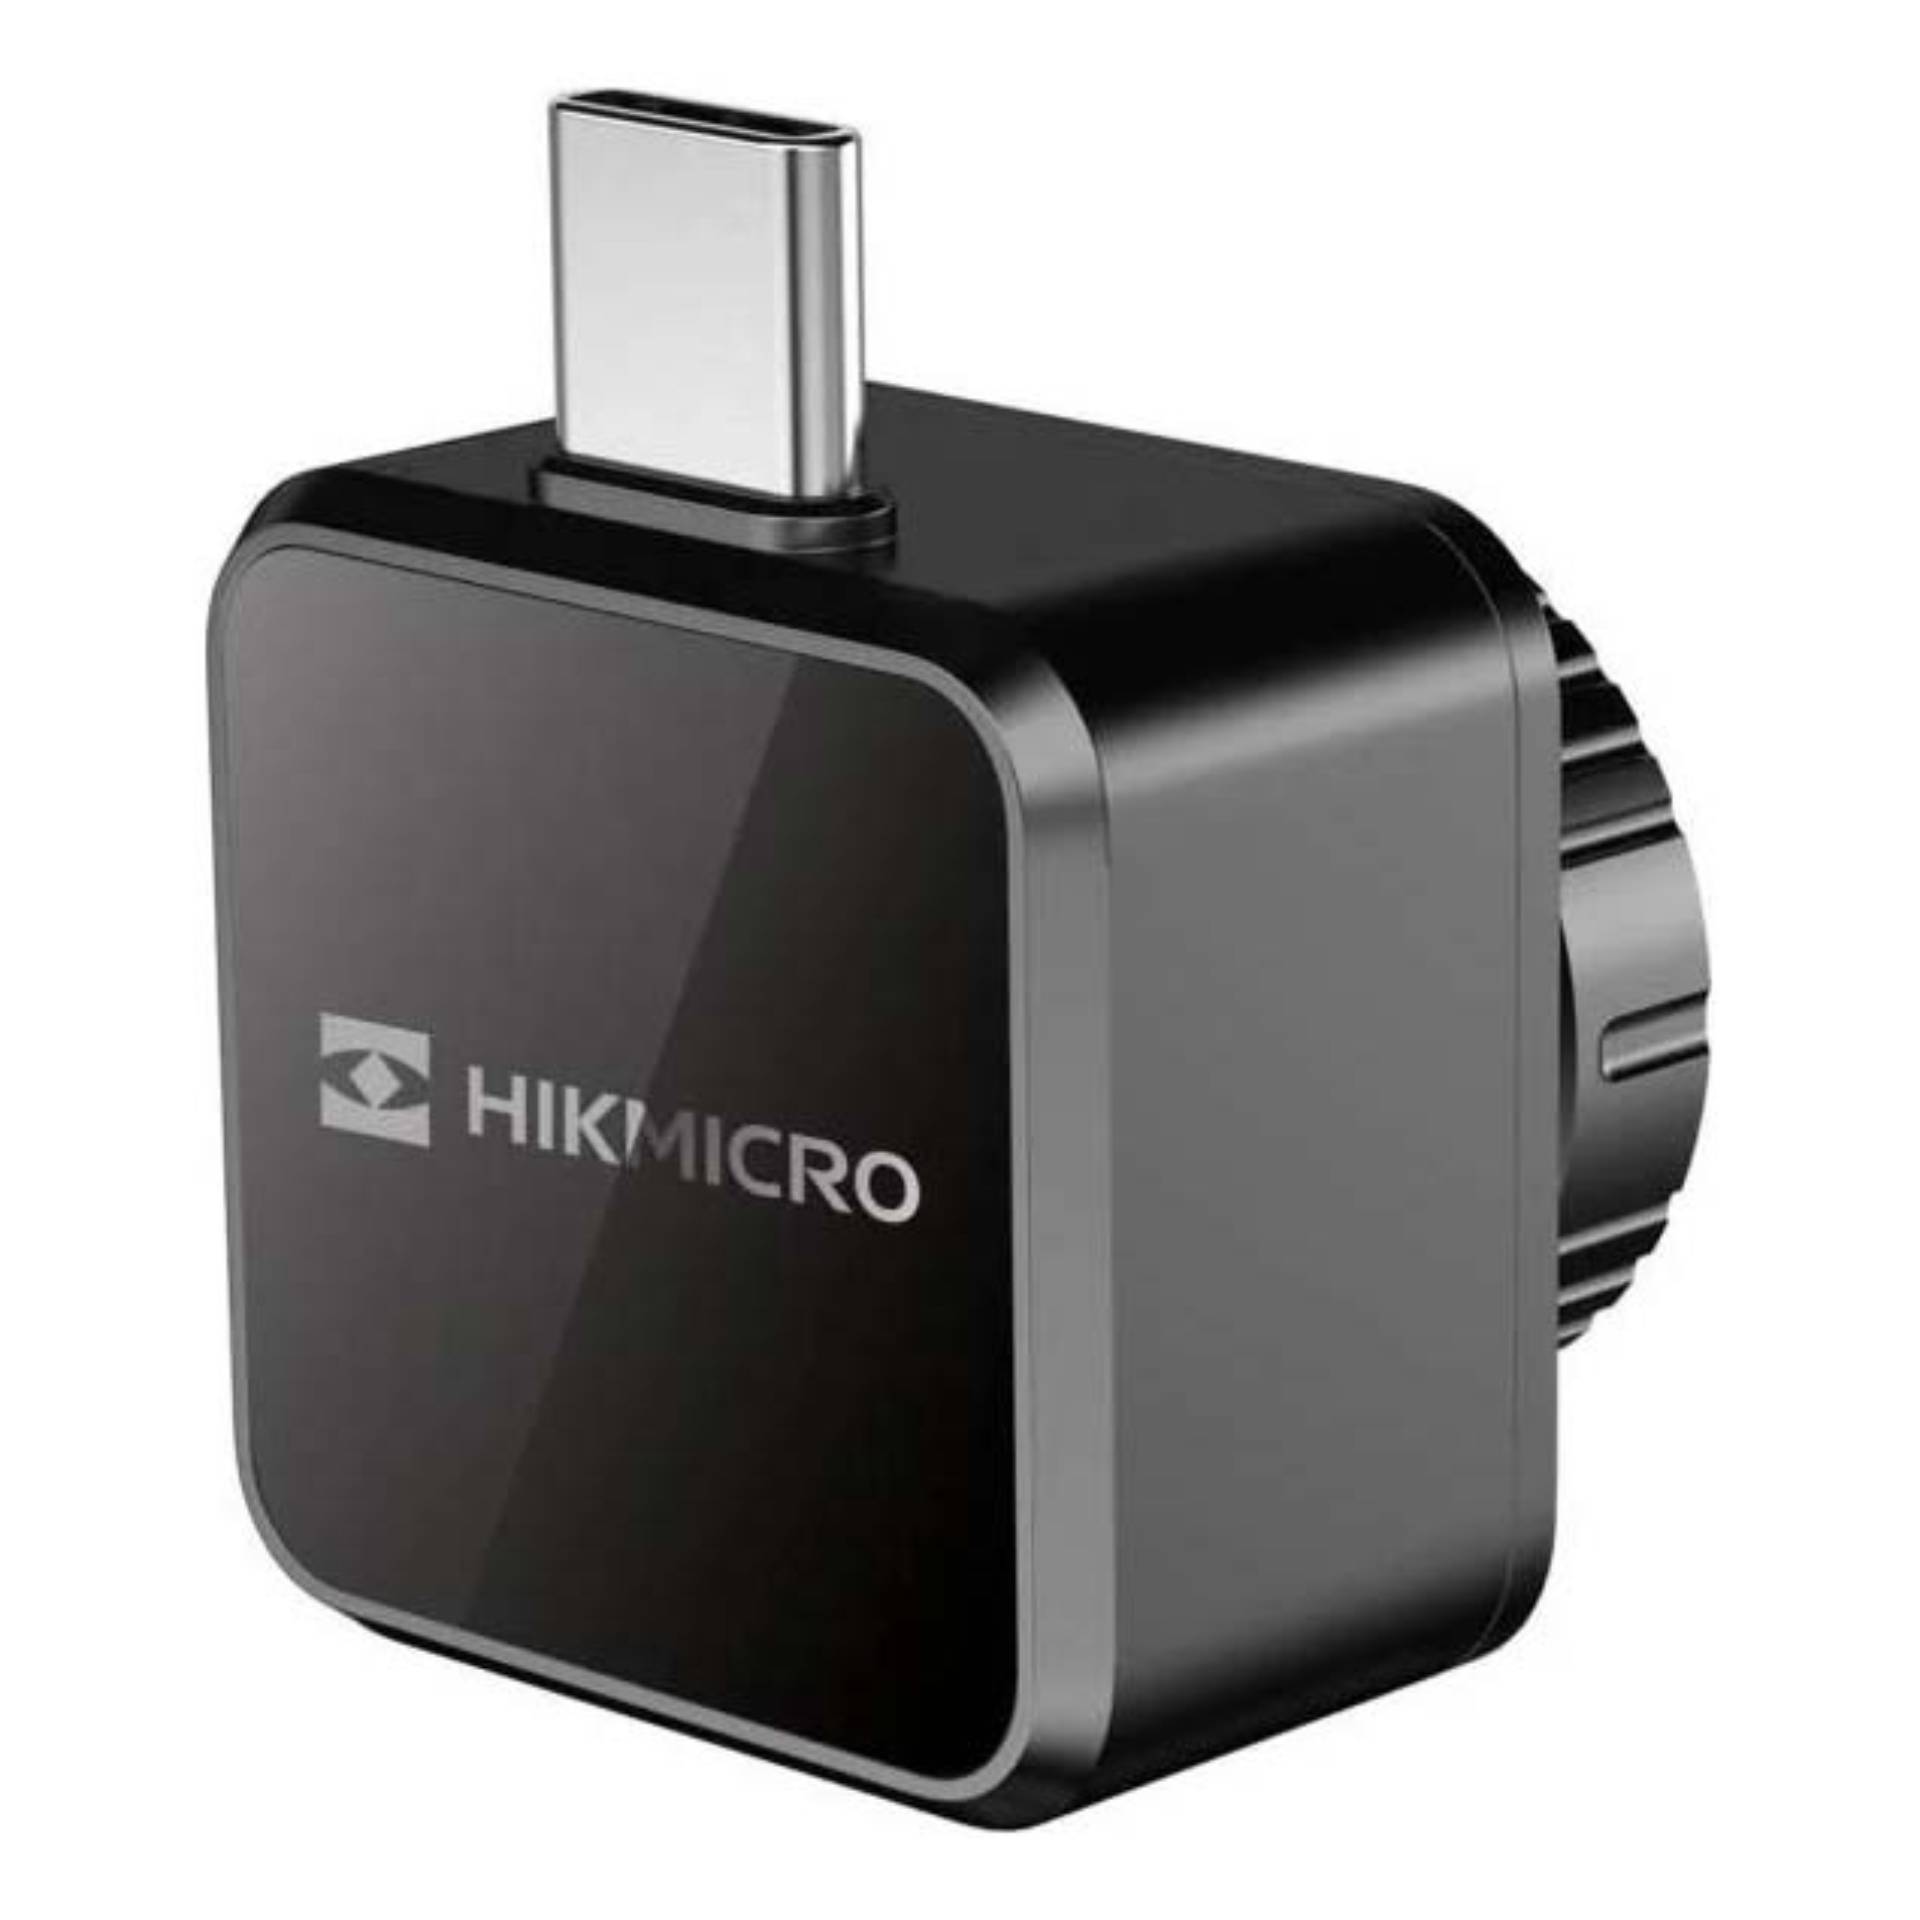 Wärmebildkamera Hikmicro für Smartphone